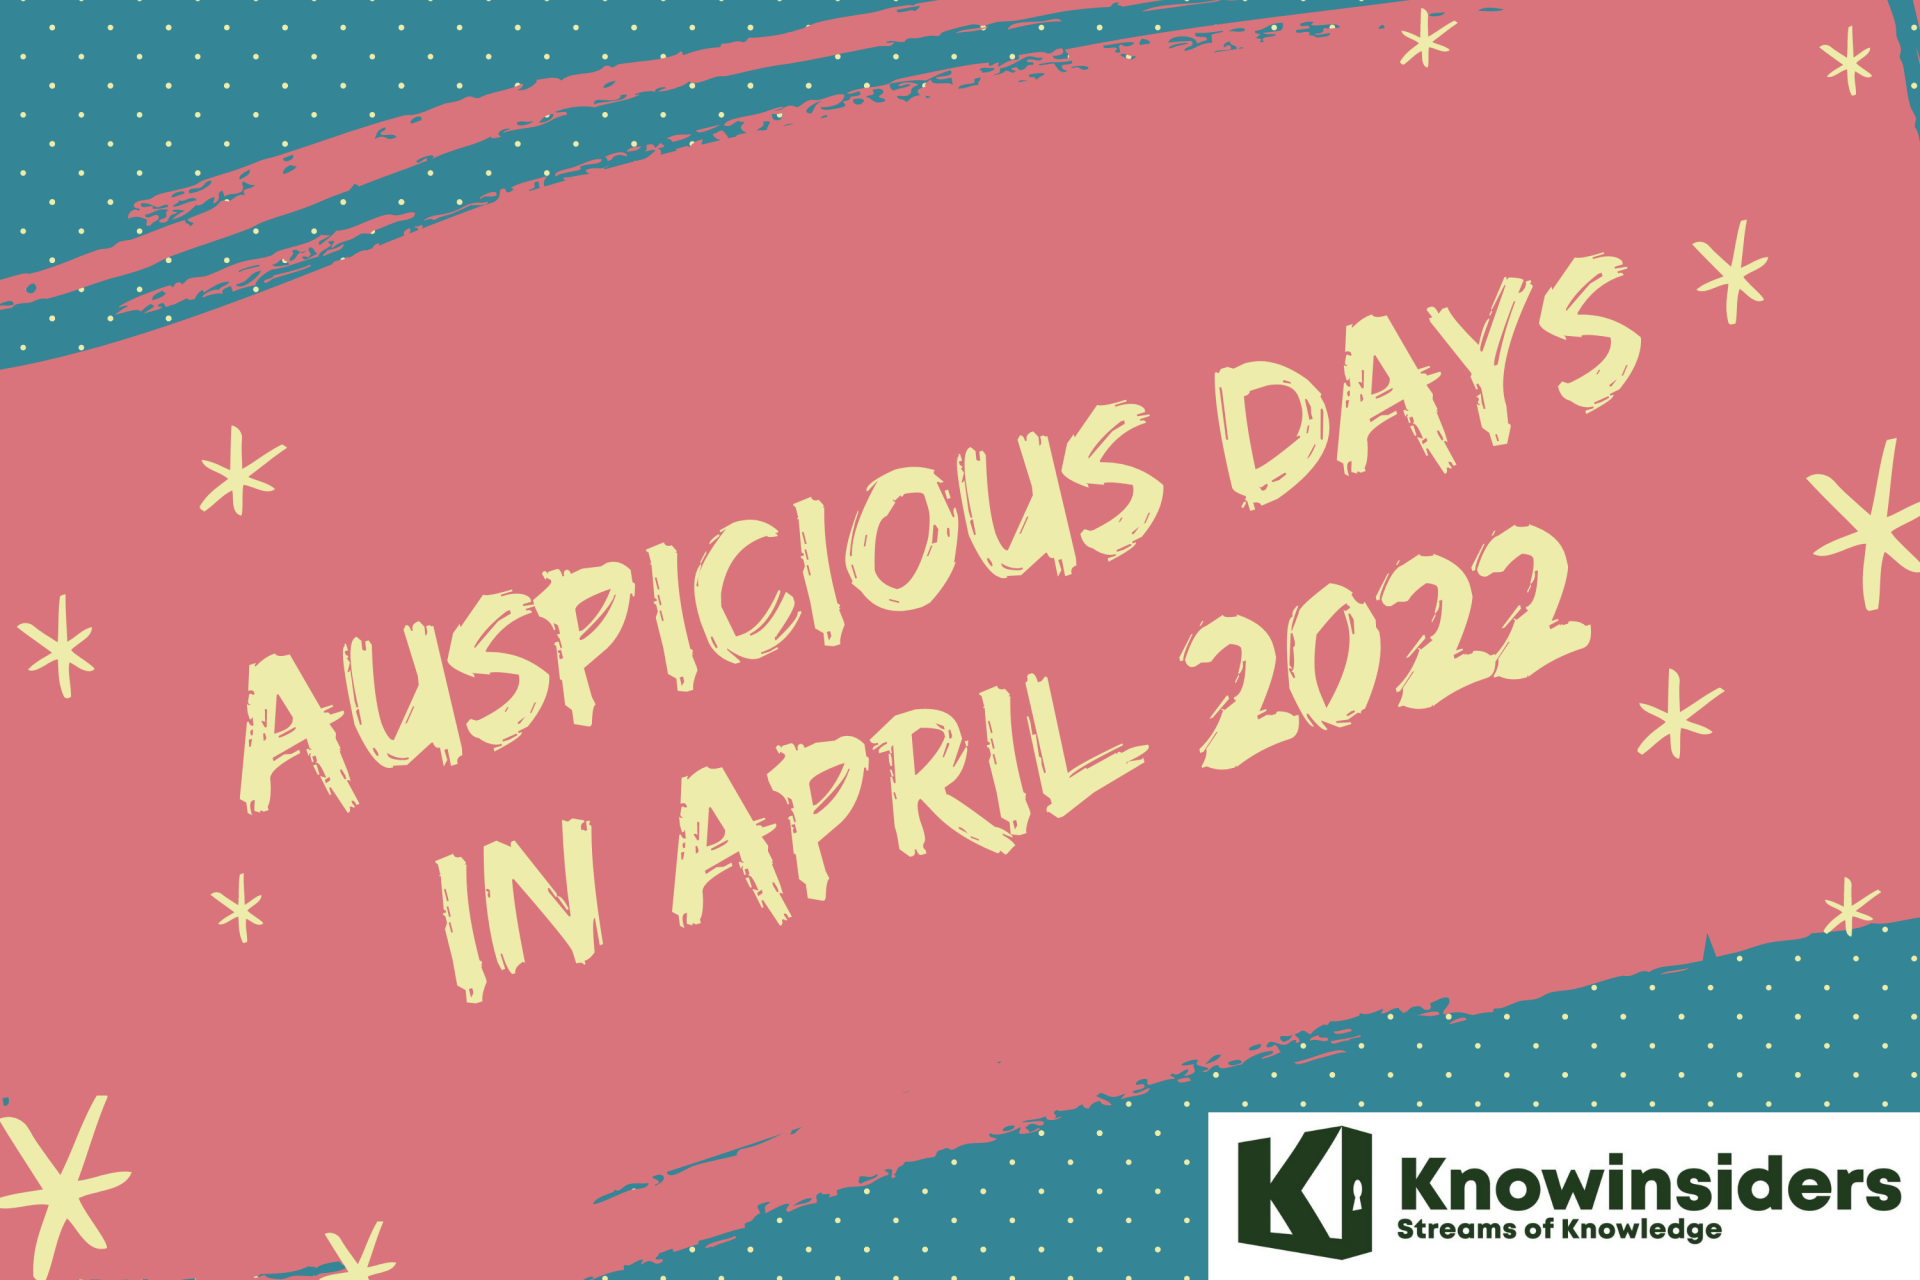 Most Auspicious Days In April 2022